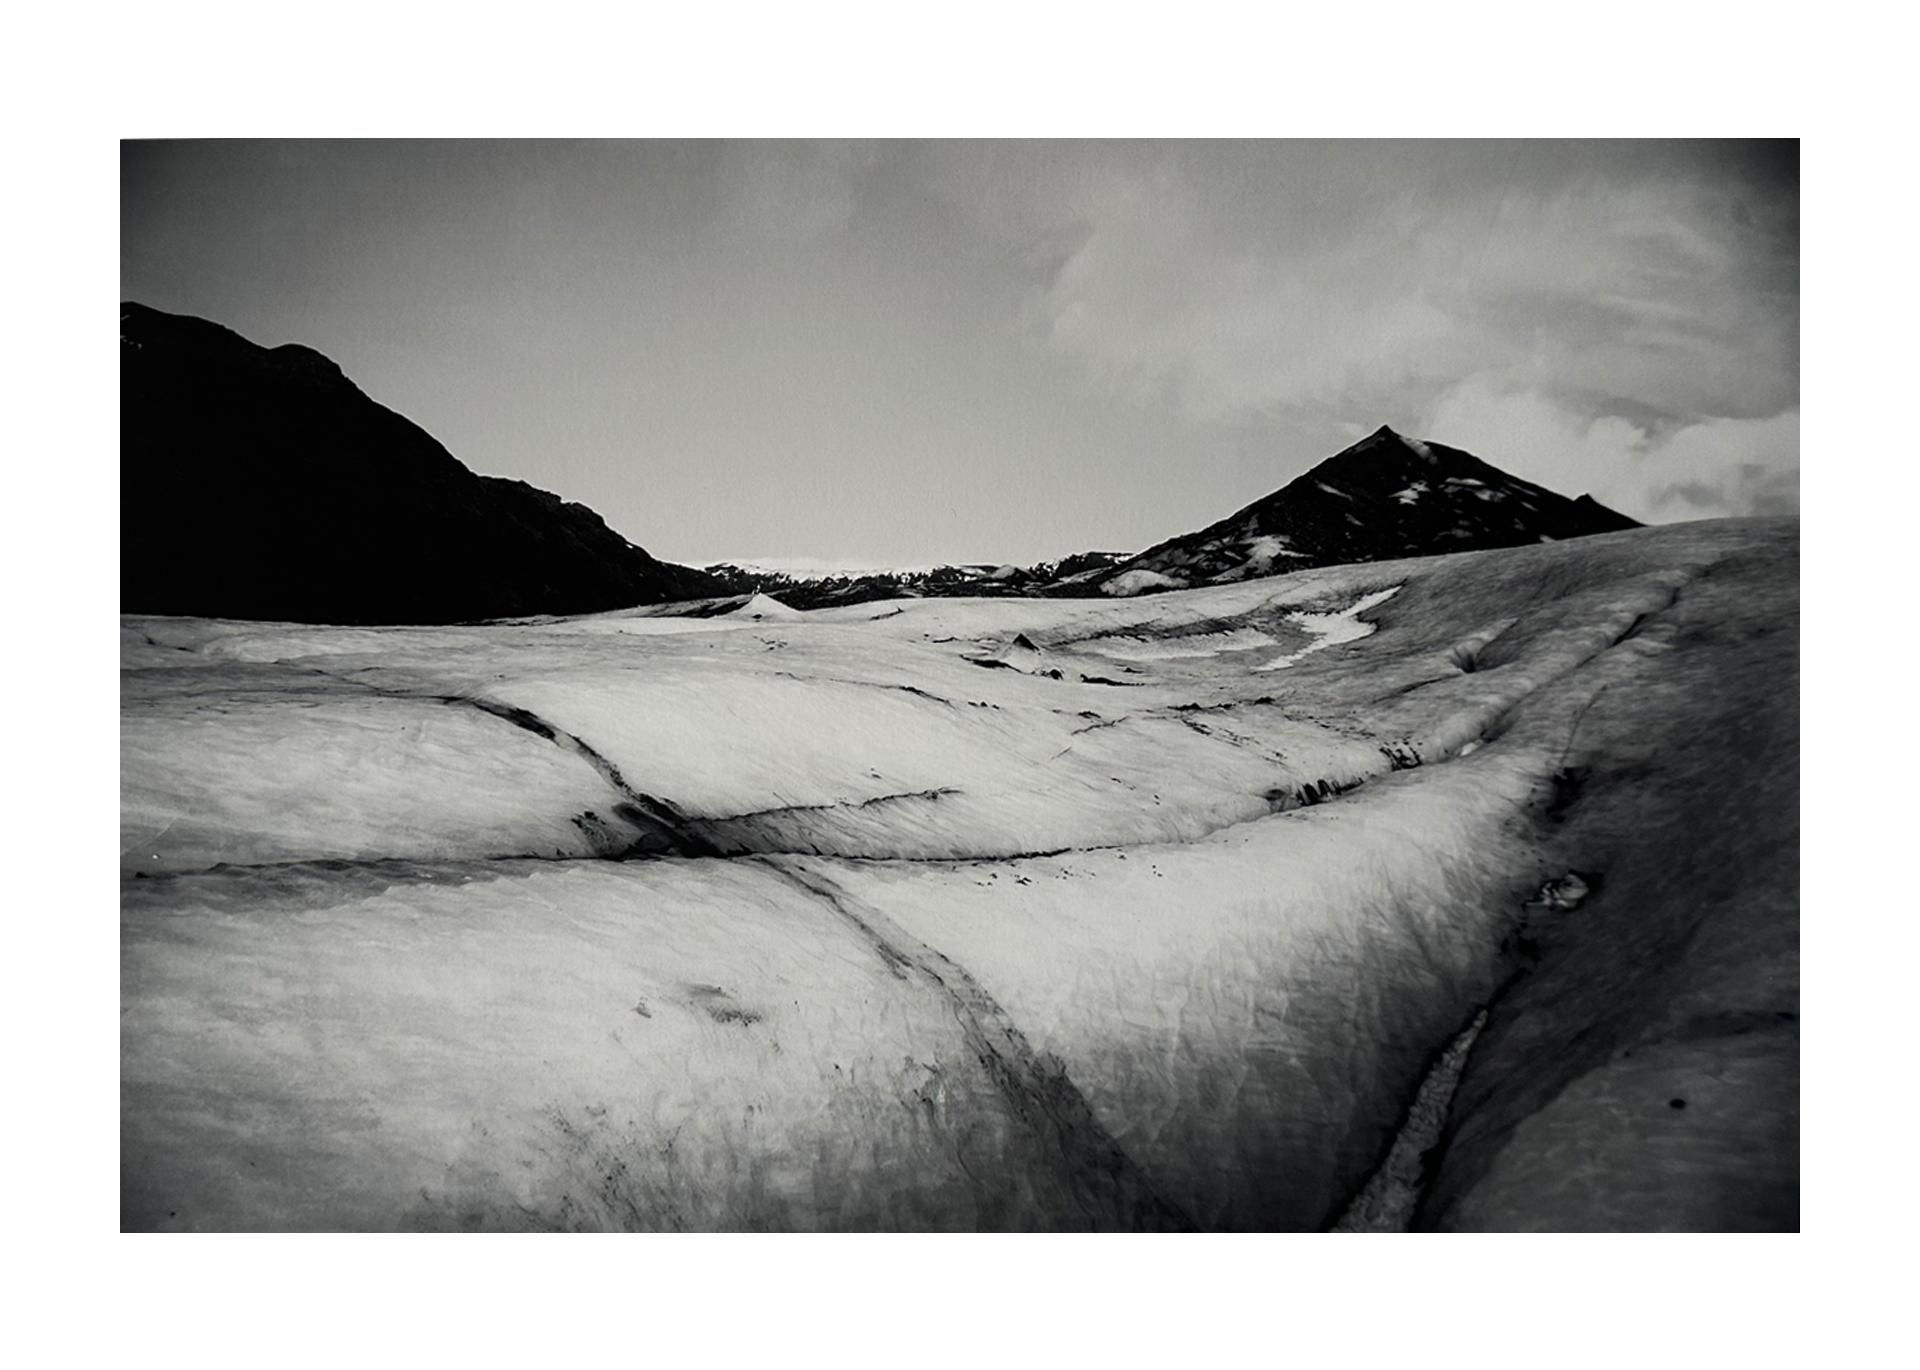 Black and White Photograph Iliana Ortega - Glacier islandais Sólheimajökull, 2011